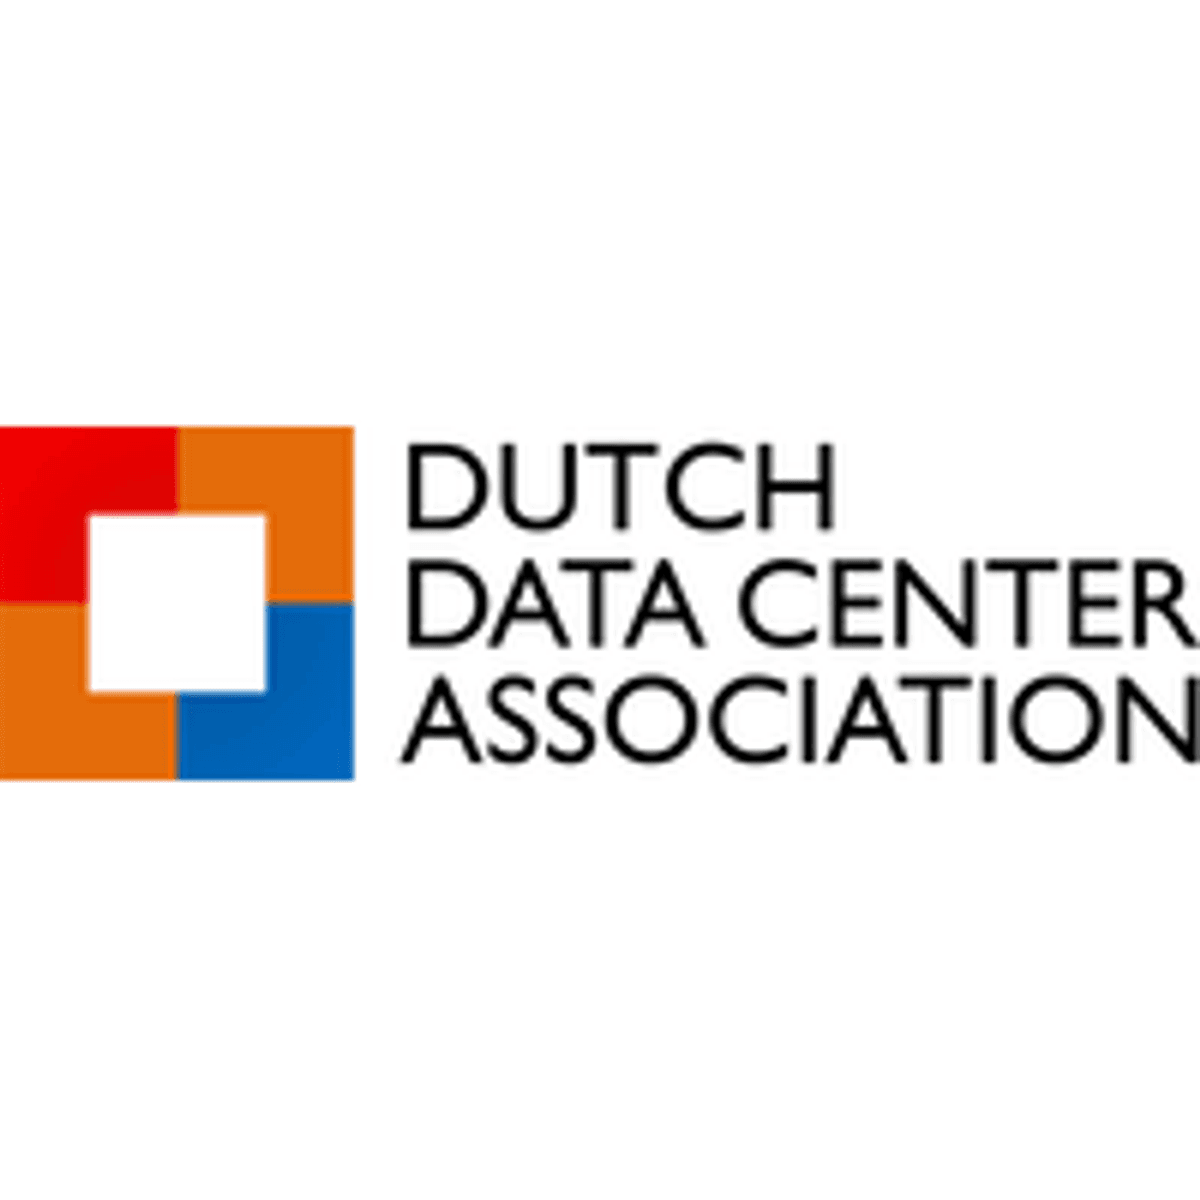 Dutch Data Center Association stelt nieuwe bestuursleden aan image